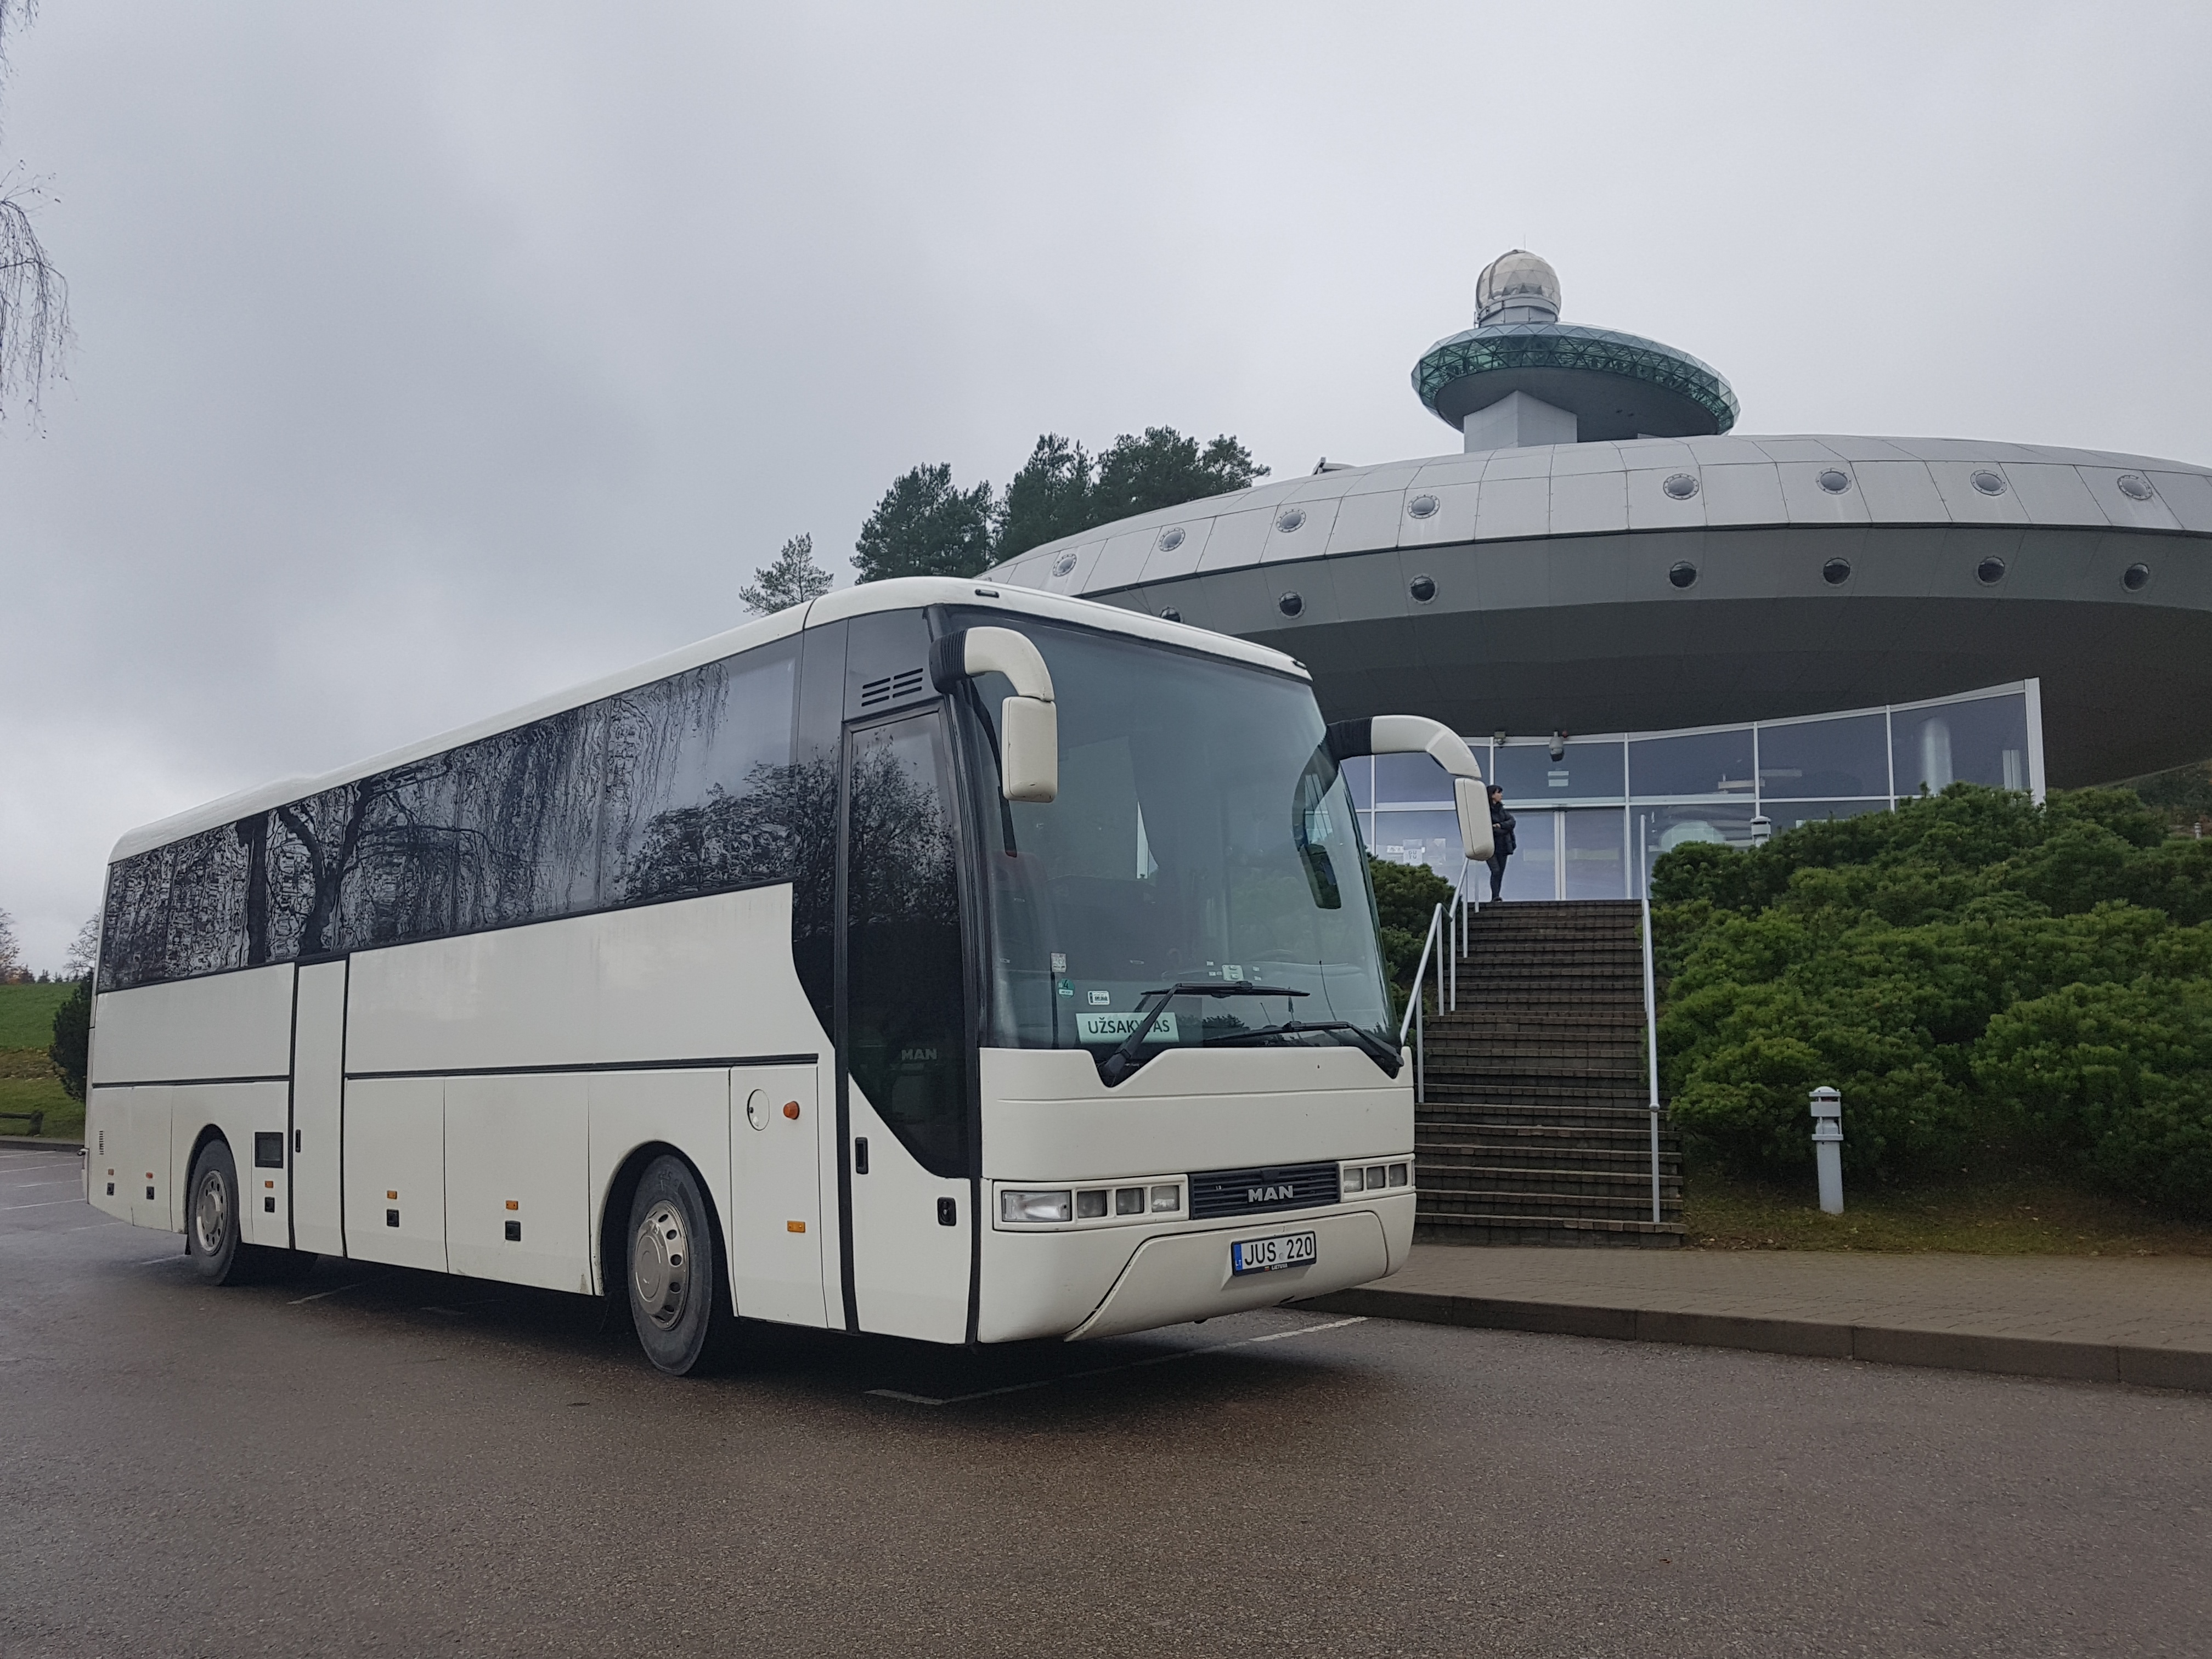 Аренда автобуса и аренда микроавтобуса в Вильнюсе с водителем, в Каунасе, Клайпеде и по всей Литве.